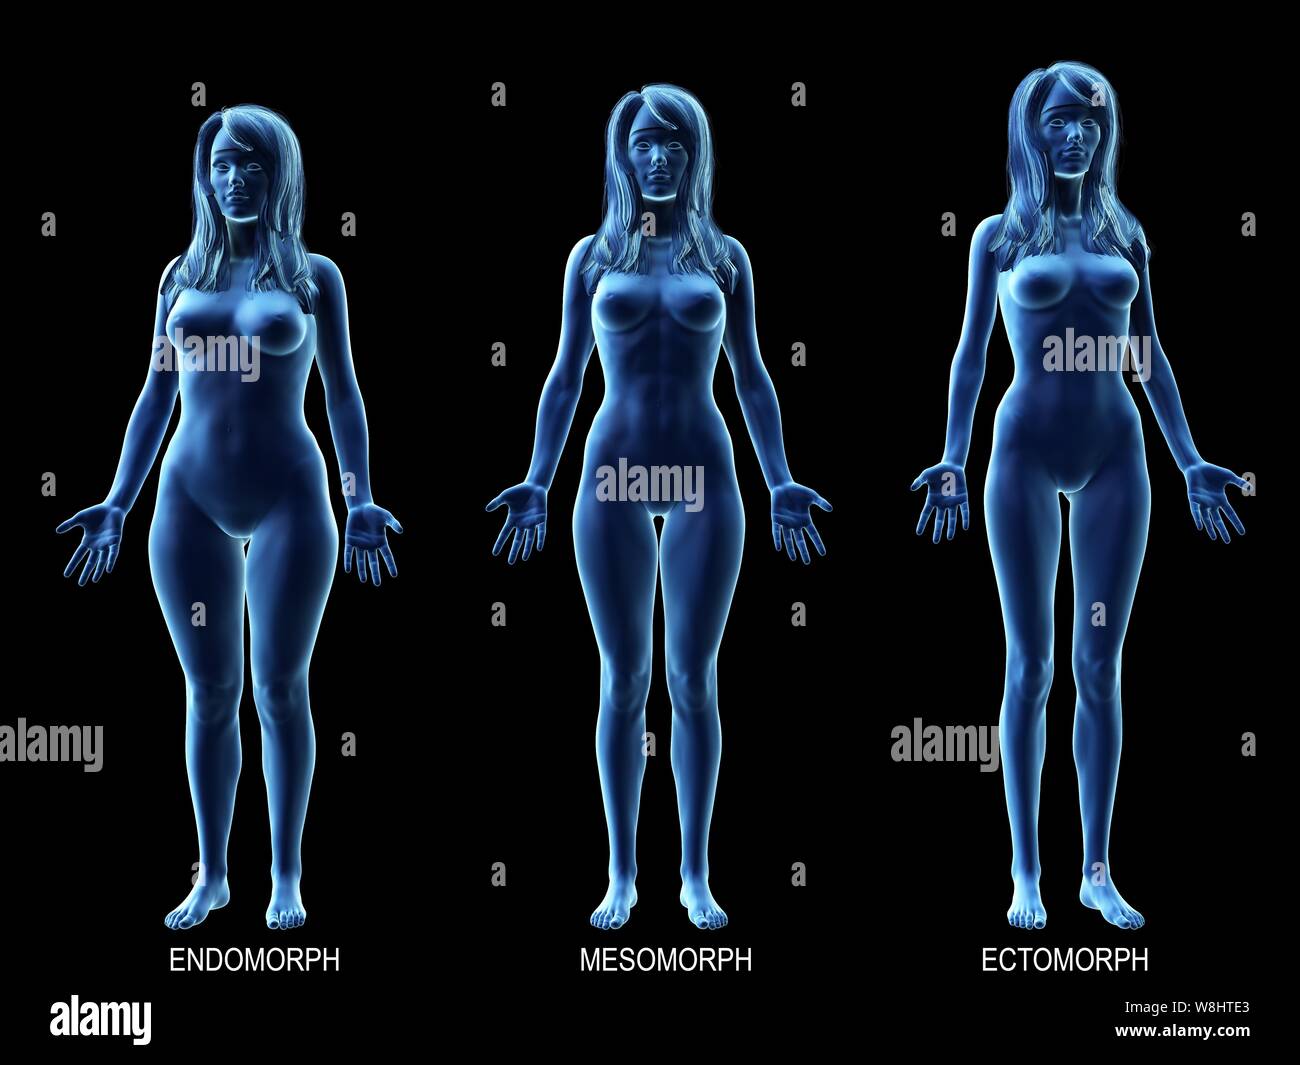 Female body types, computer illustration Stock Photo - Alamy